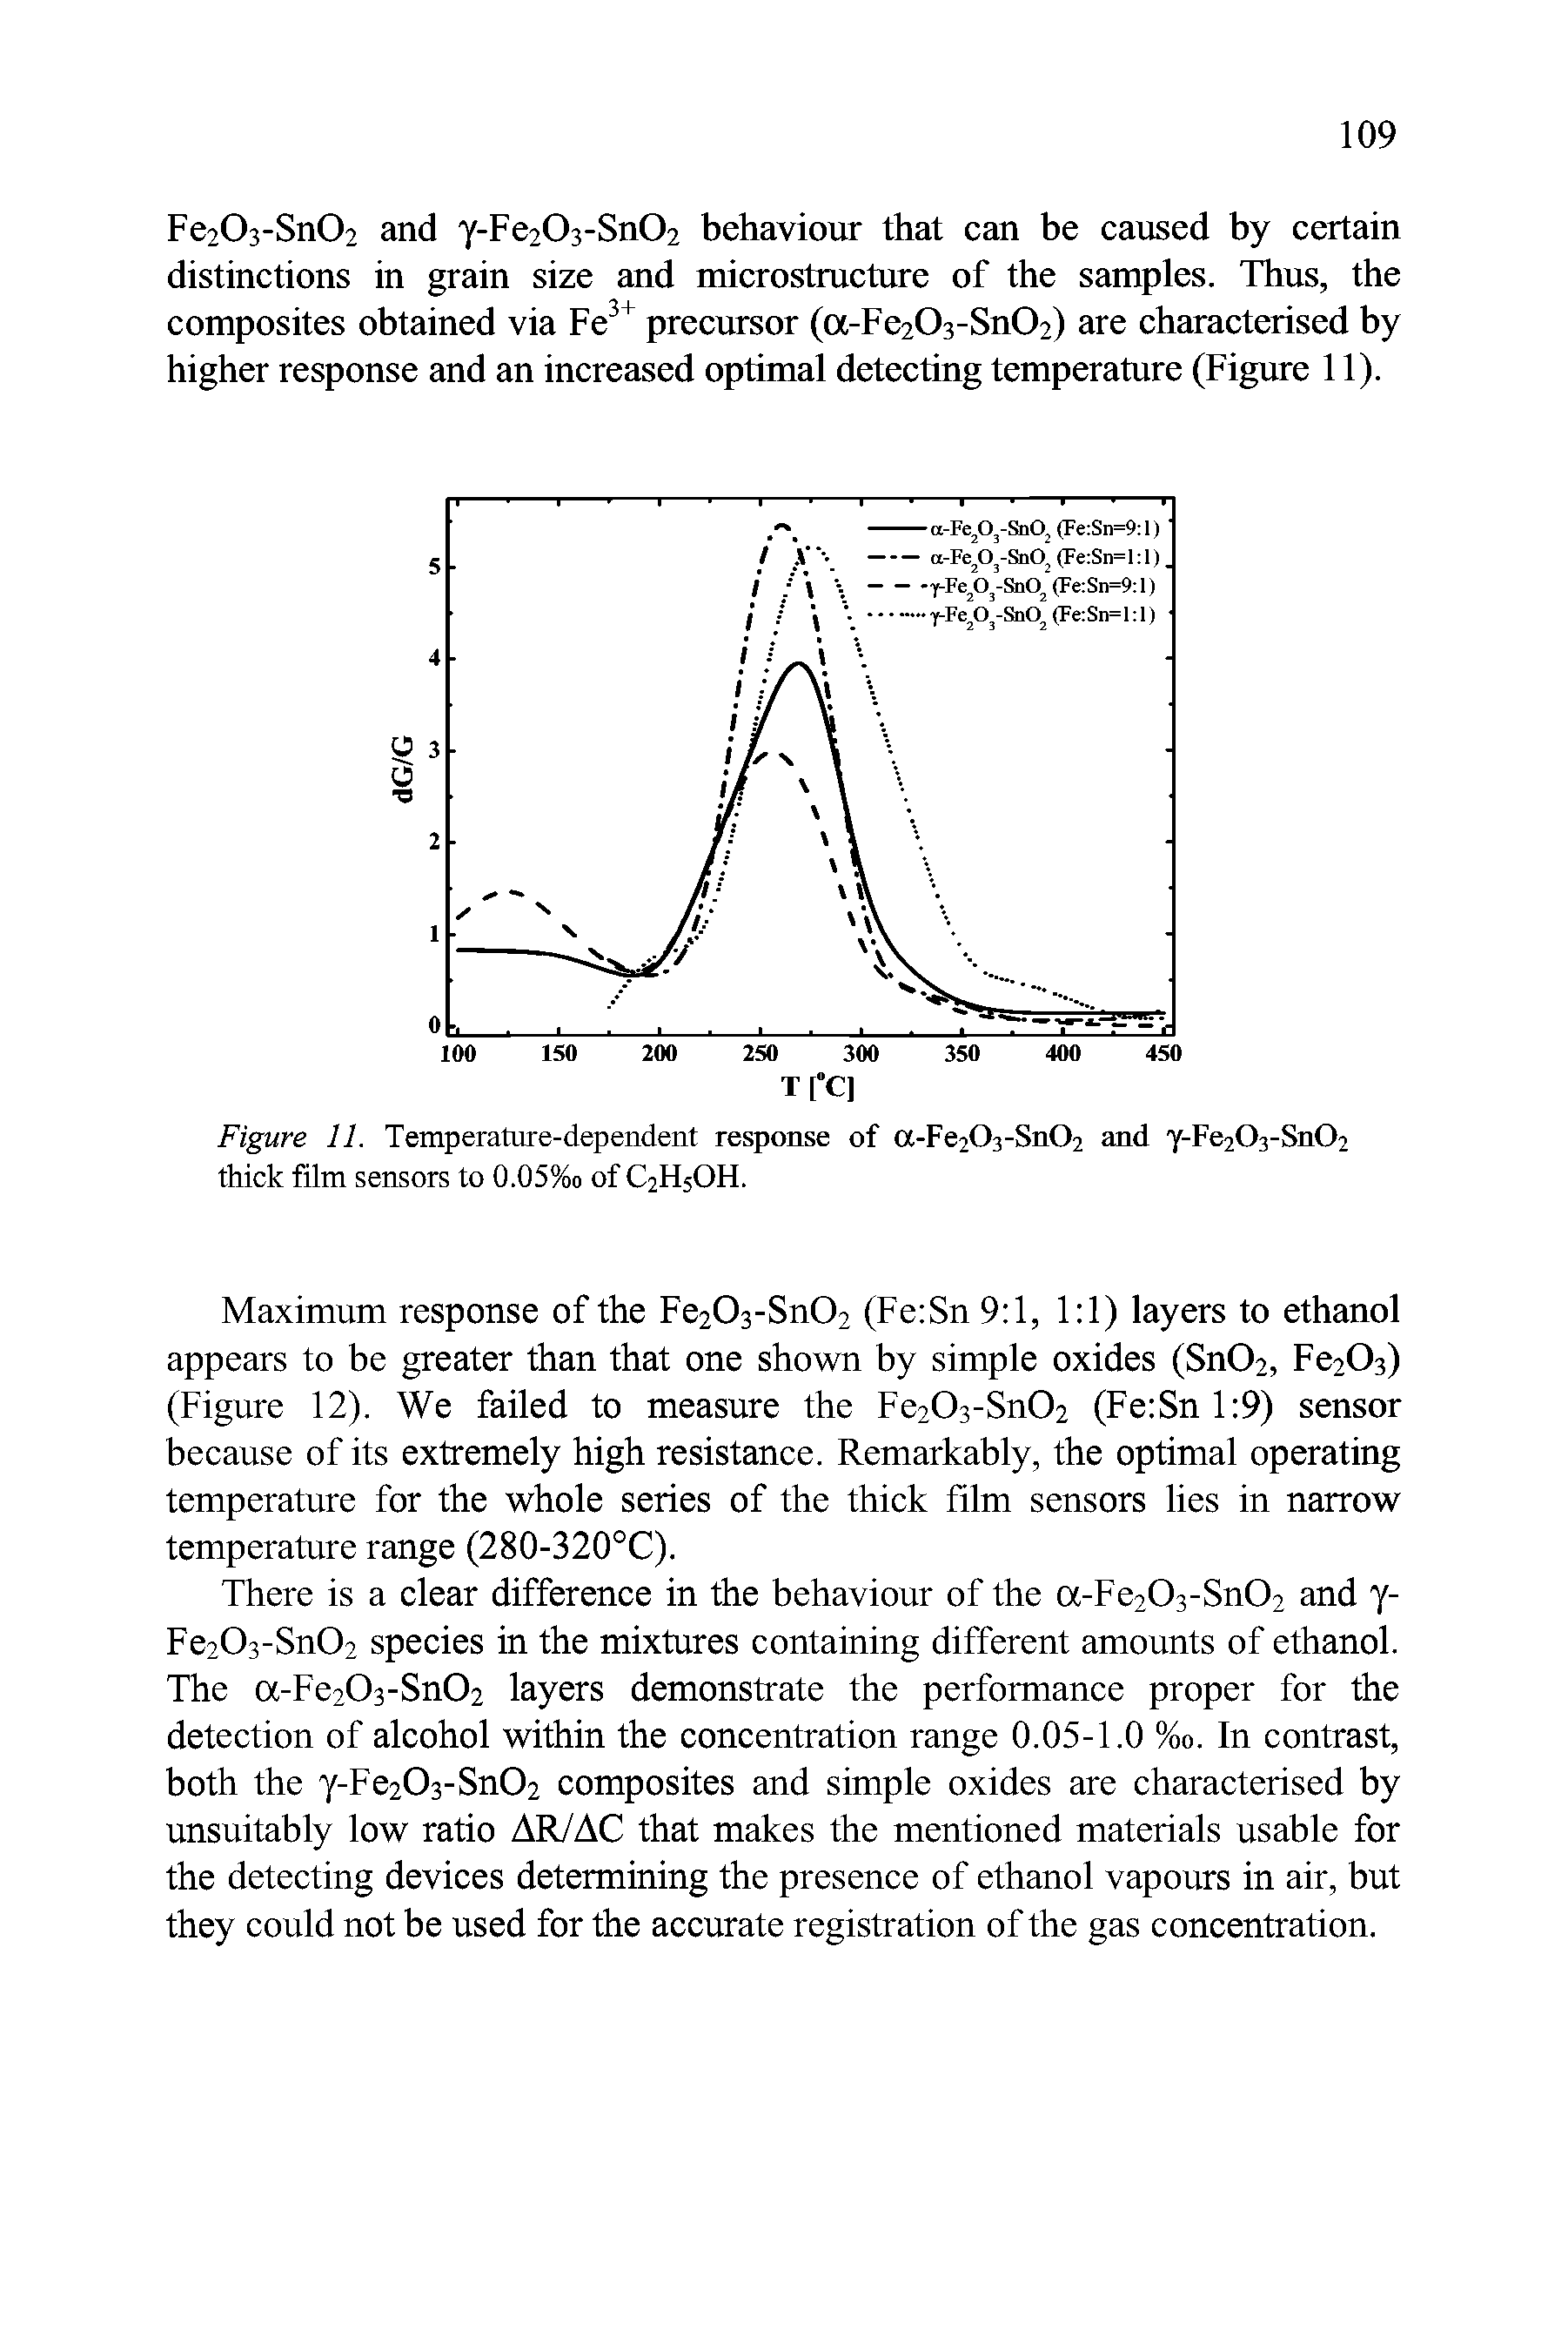 Figure 11. Temperature-dependent response of a-Fe203-Sn02 and y-Fe203-Sn02 thick film sensors to 0.05%o of C2H5OH.